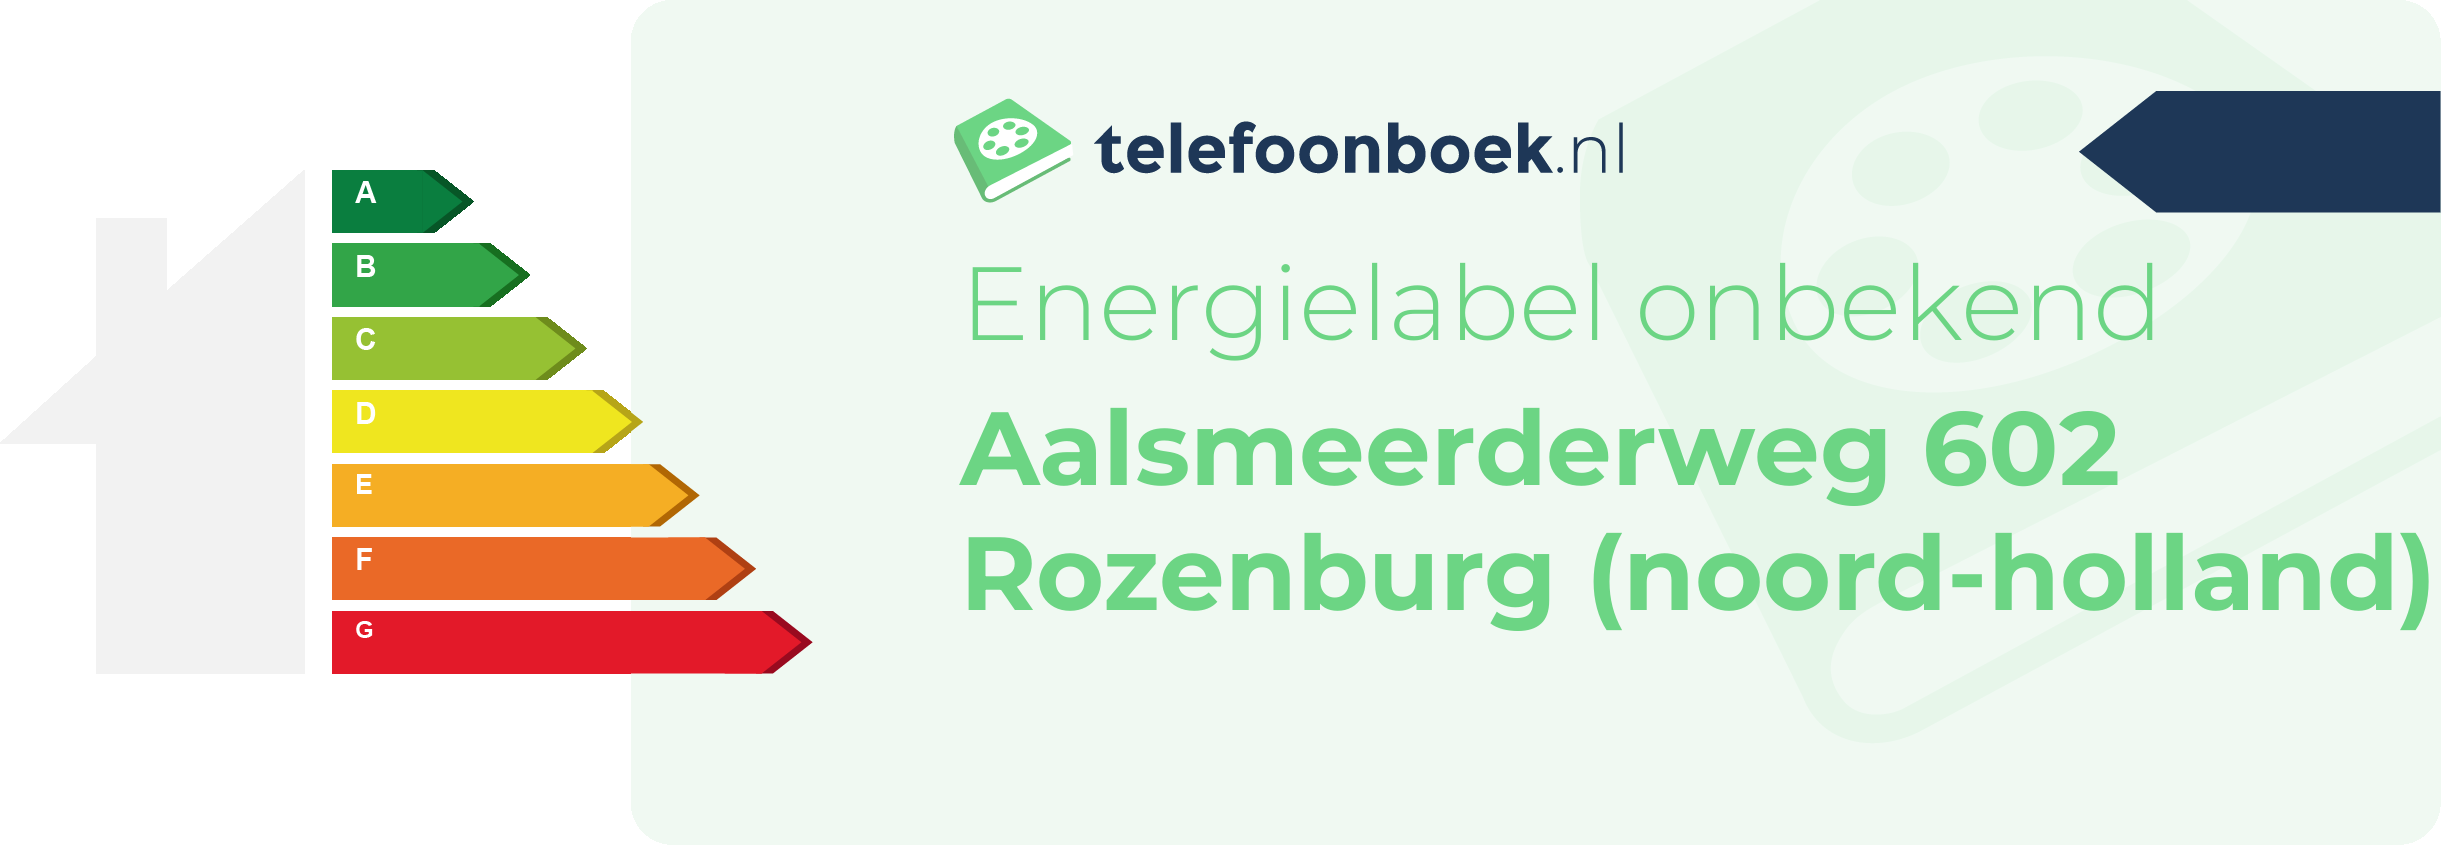 Energielabel Aalsmeerderweg 602 Rozenburg (Noord-Holland)